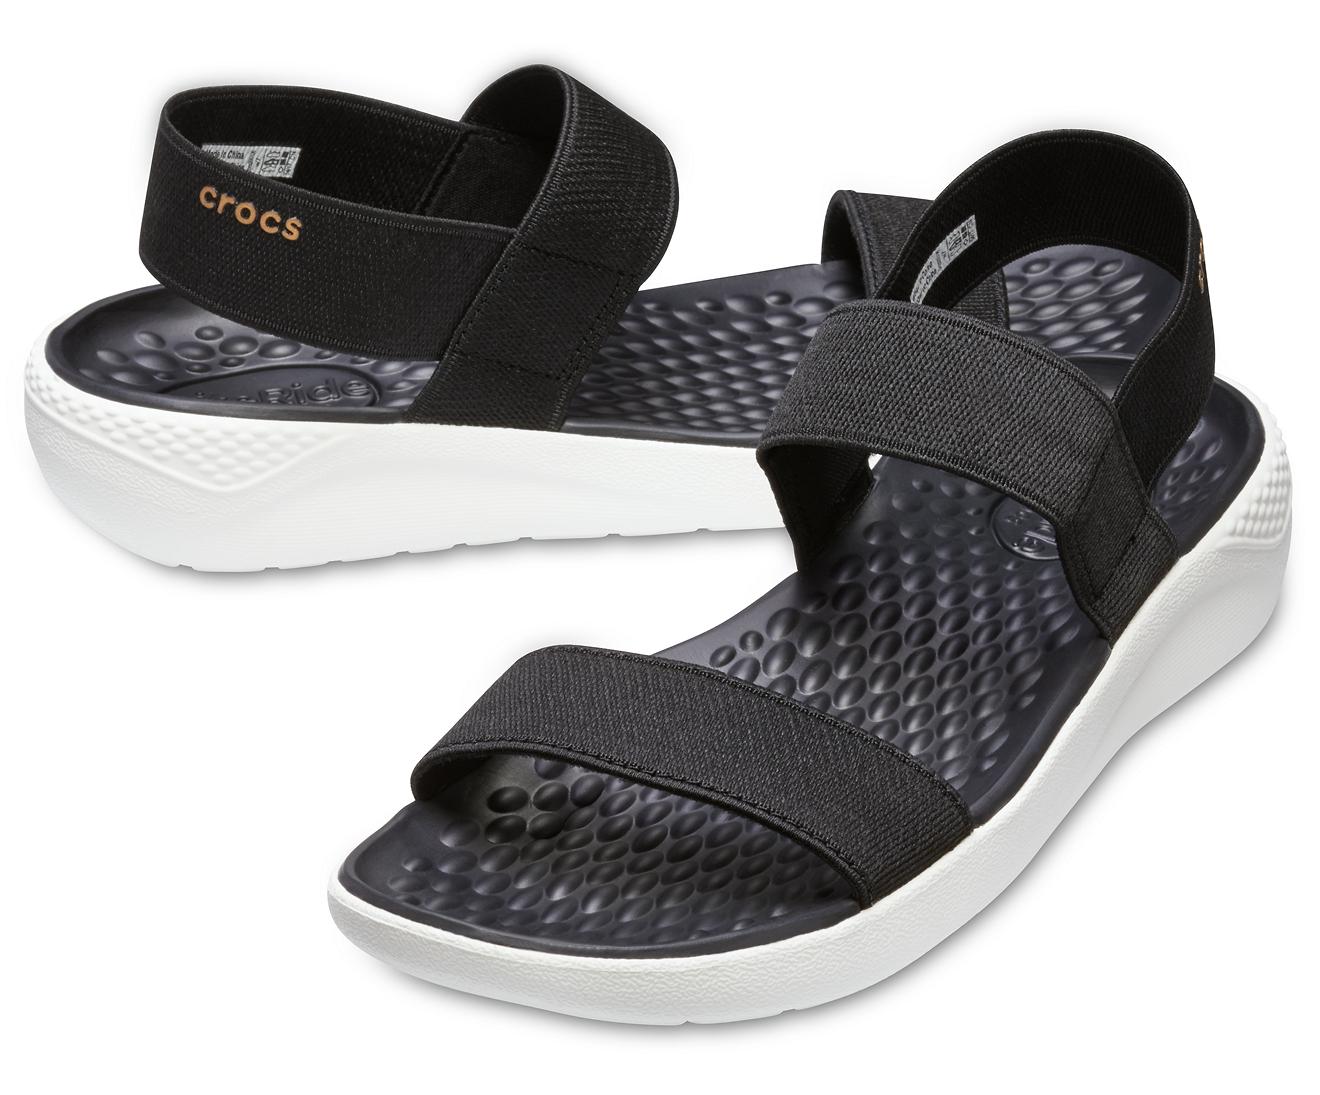  Crocs   Literide  Sandal  in Black White Black Save 50 